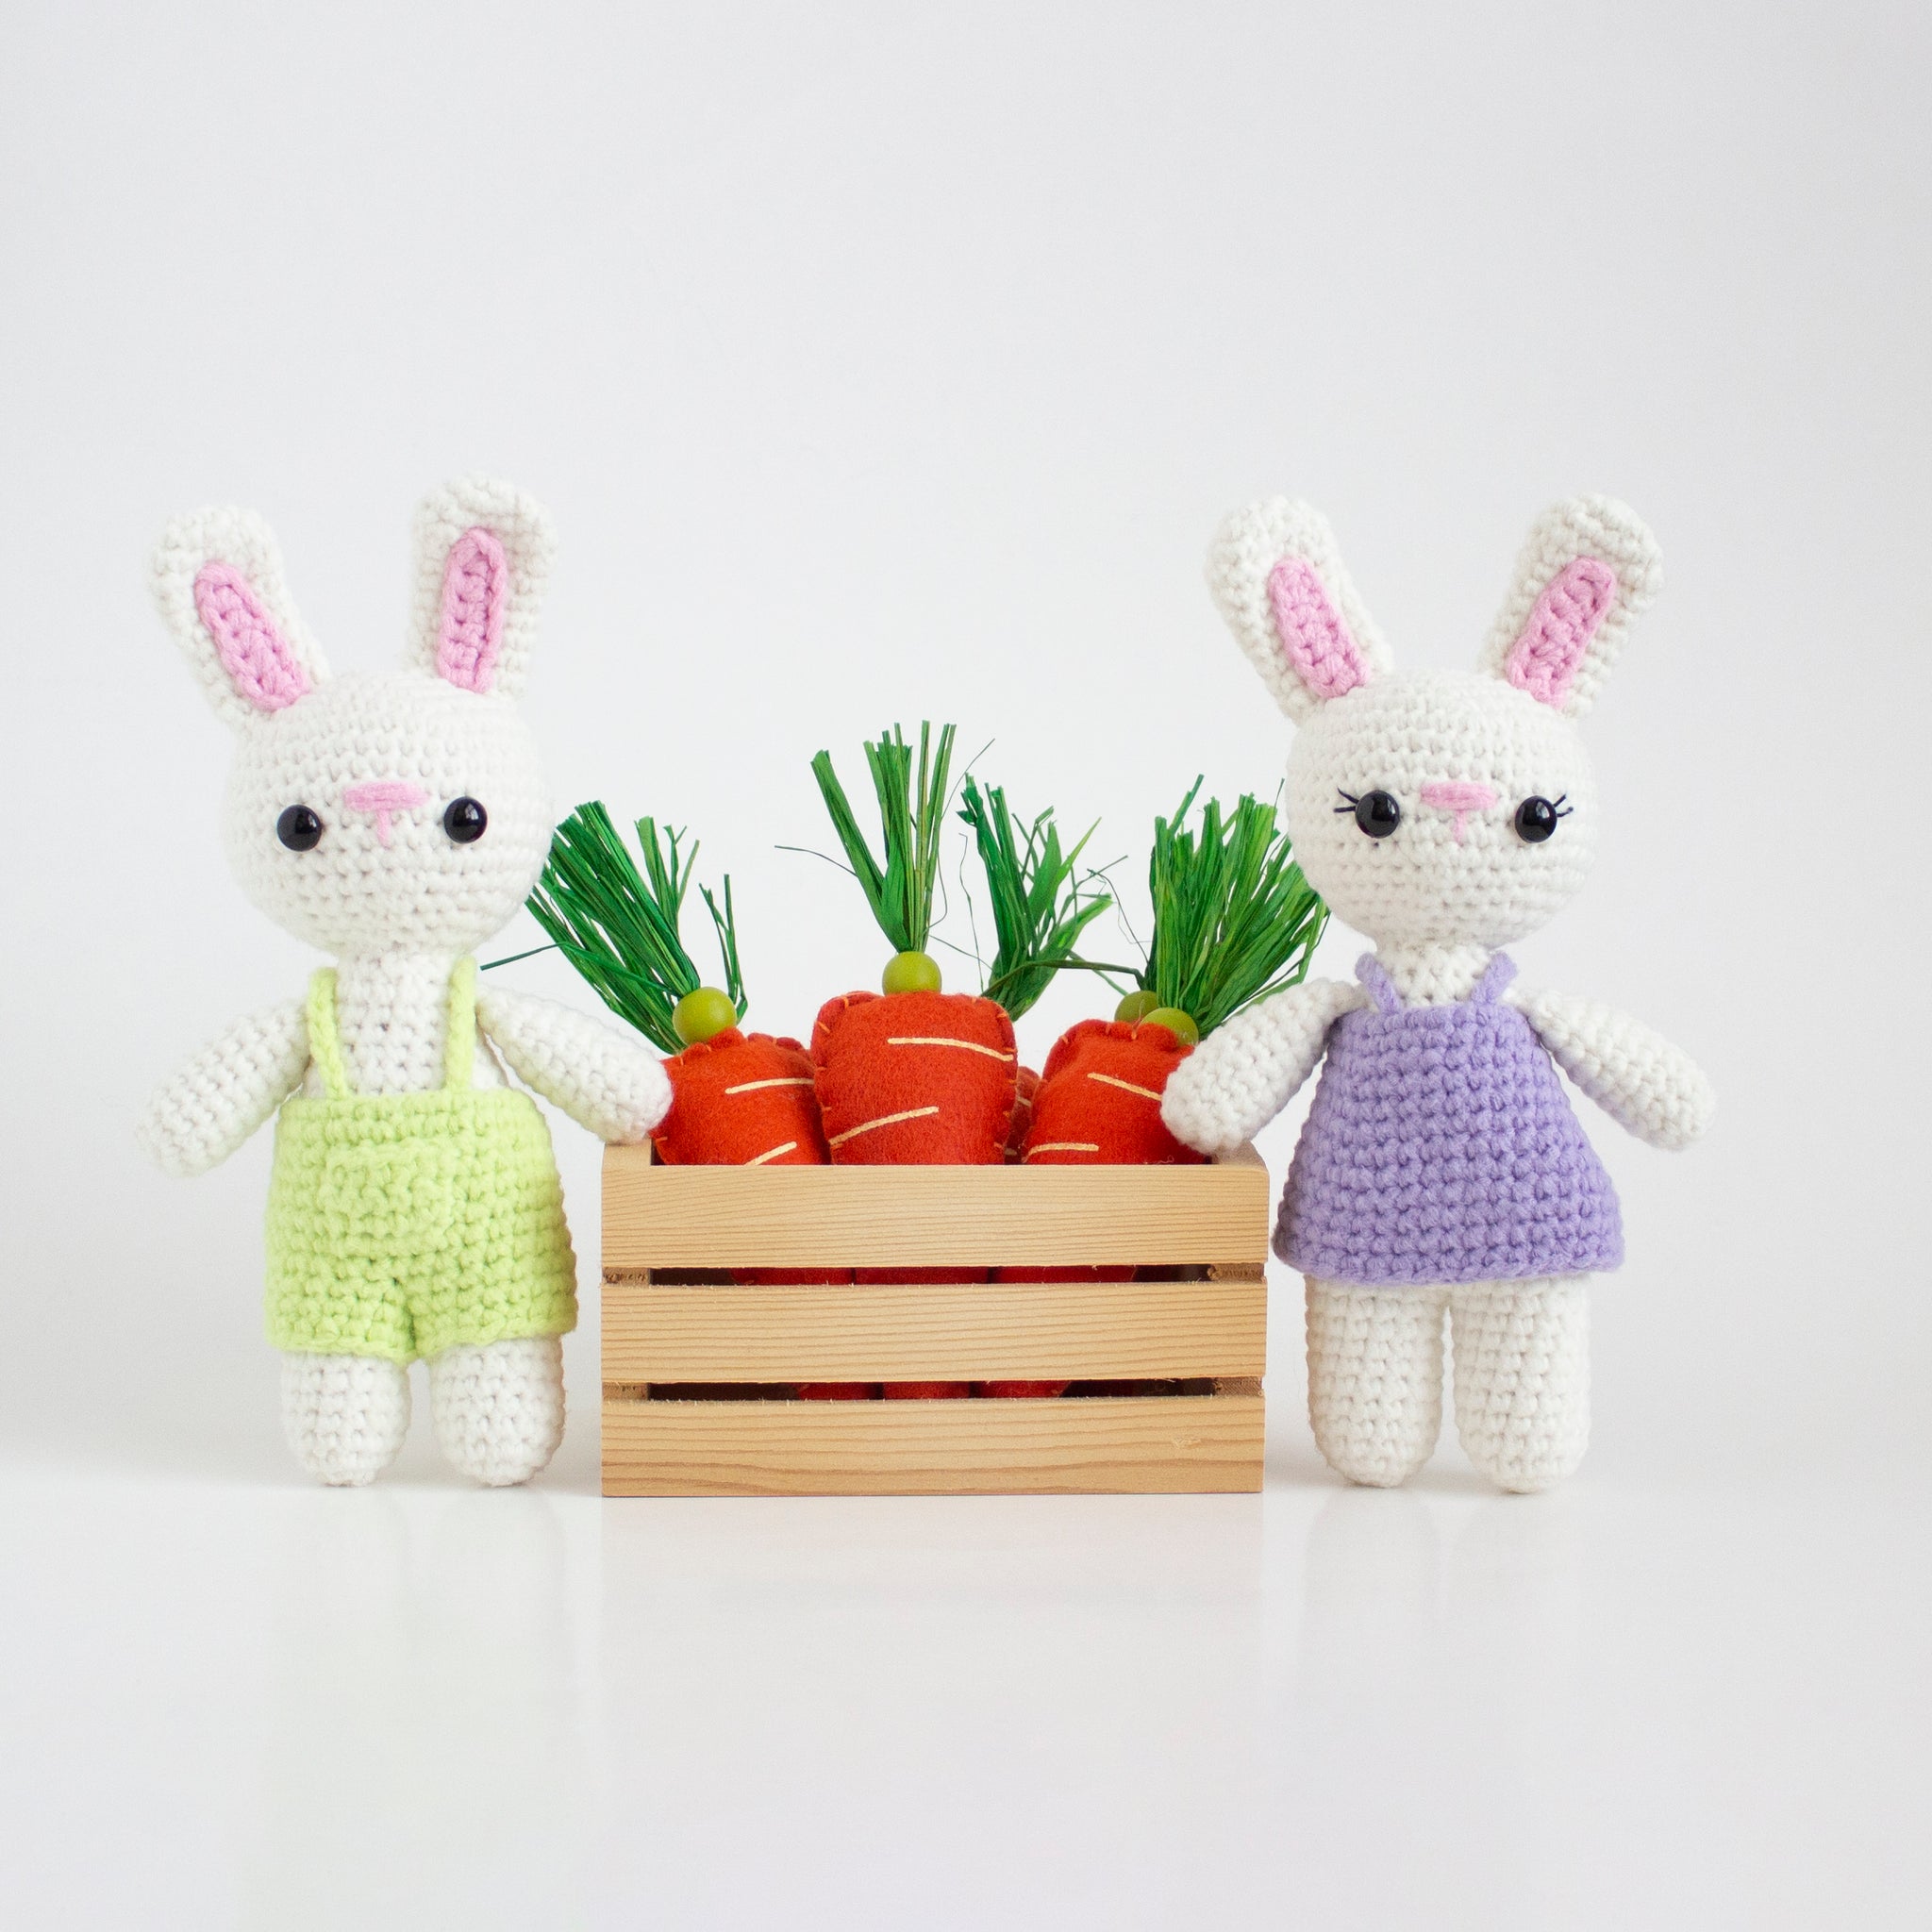 Easy Crochet Bunny Pattern with Carrots - Amigurumi